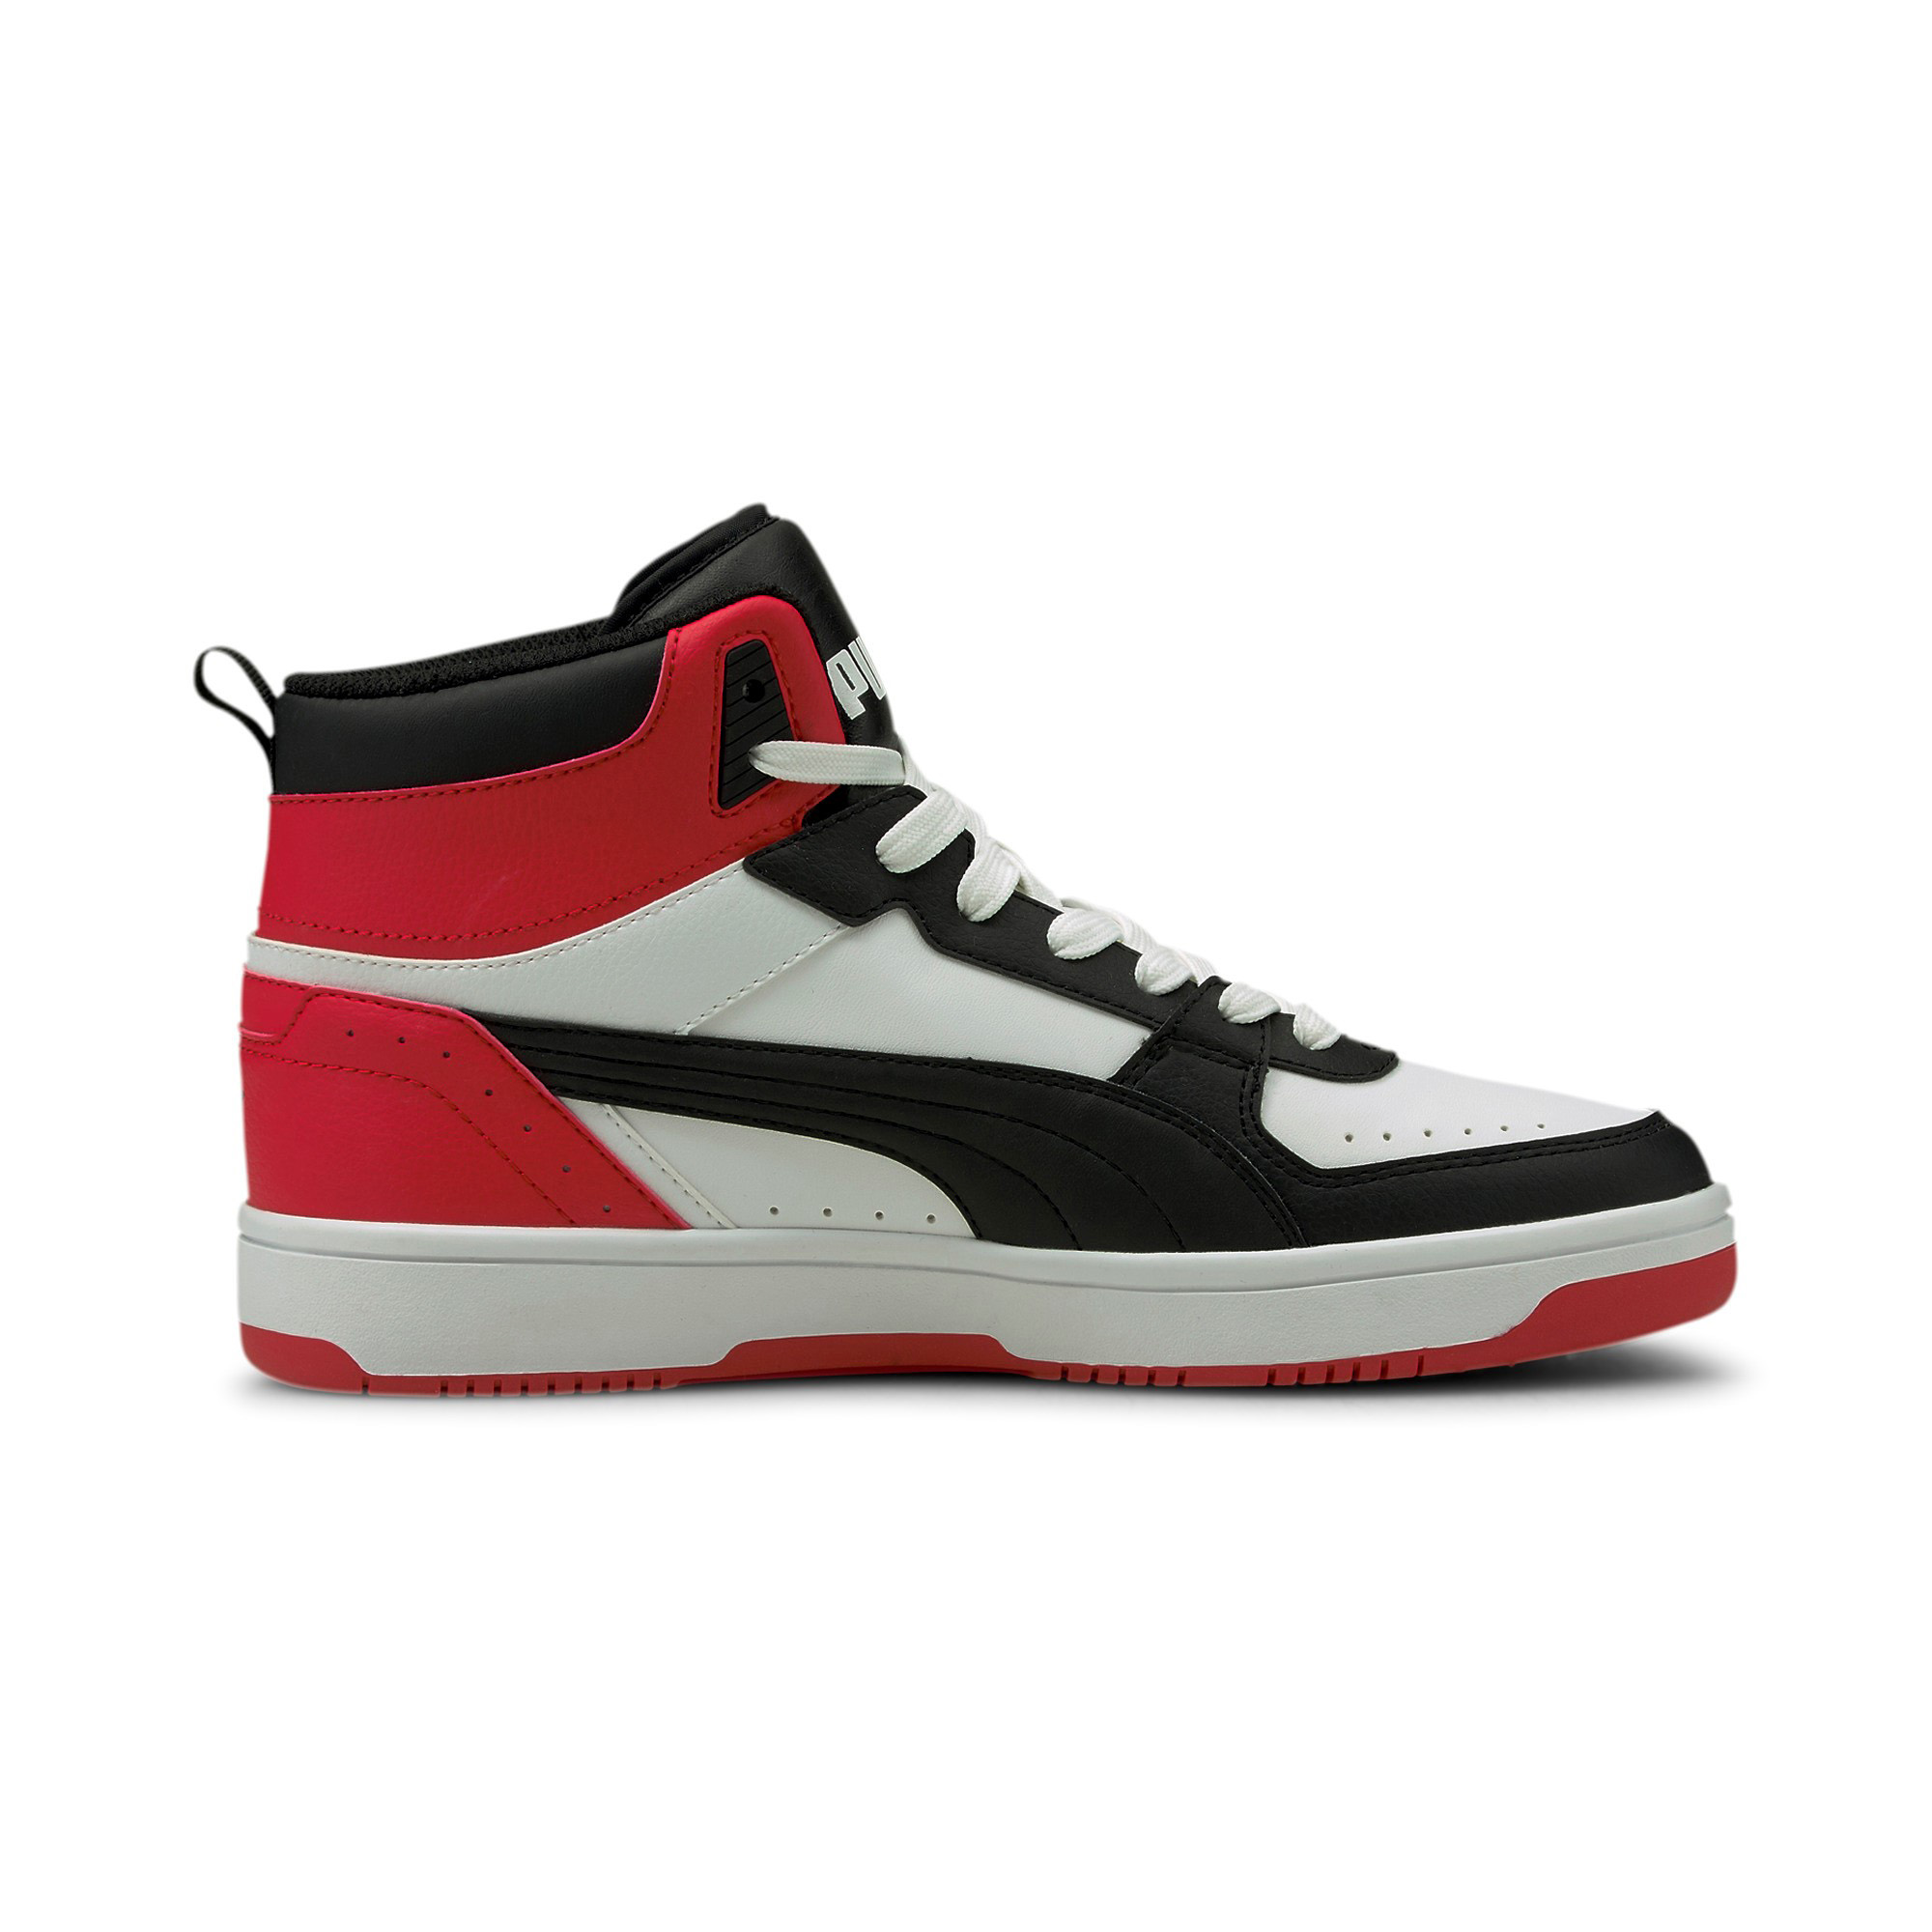 Puma Rebound JOY Hoher Sneaker Stiefel Boots Herren Sneaker 374765 03